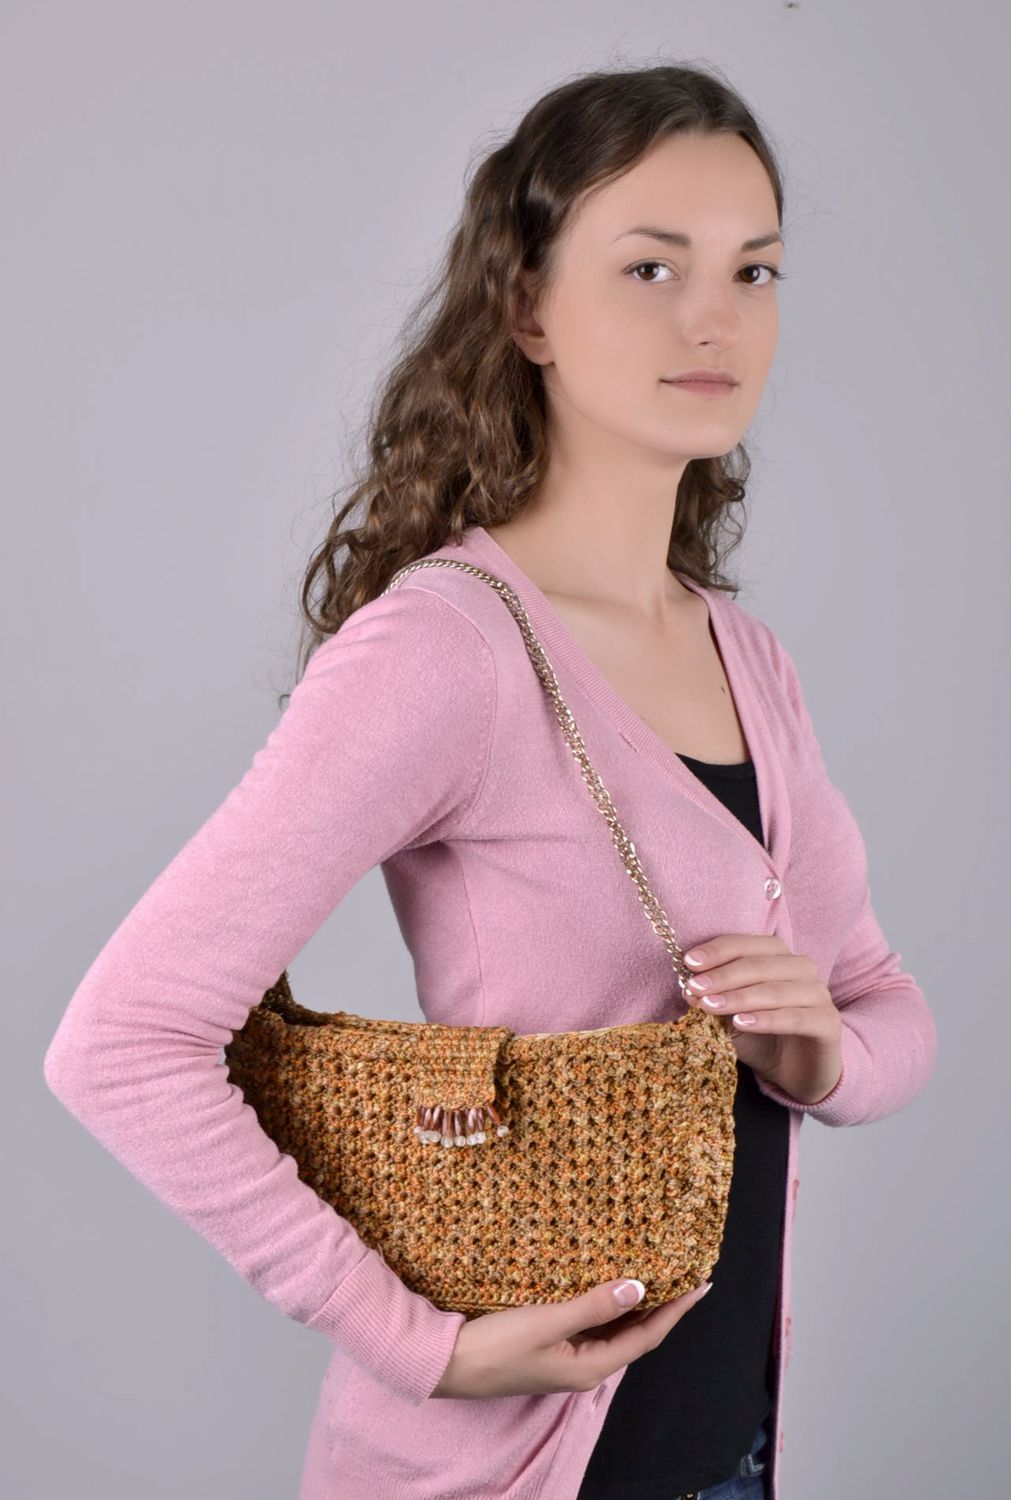 Handmade knitted purse photo 2